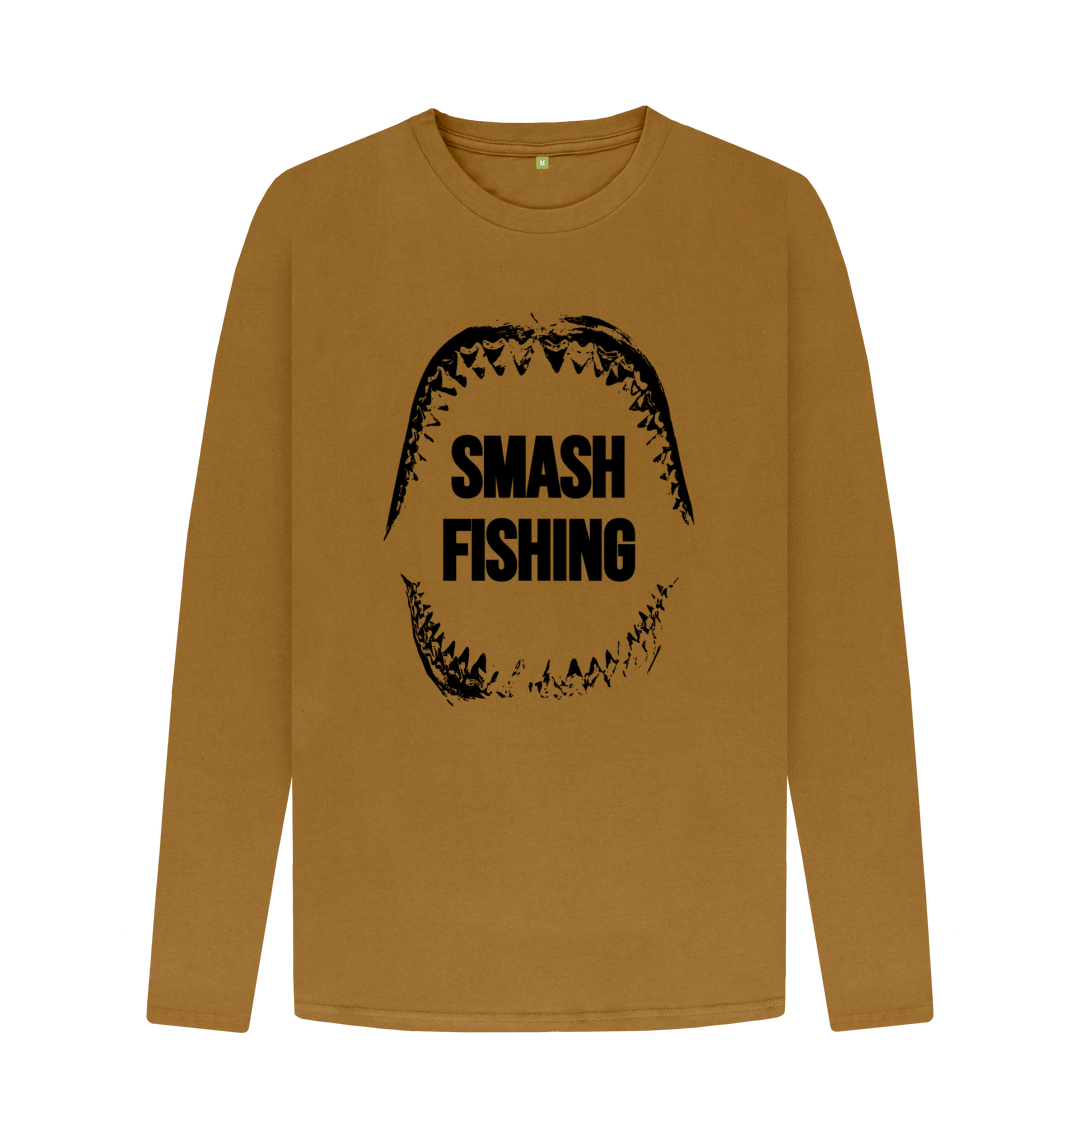 MEN'S SMASH FISHING JAWS LONG SLEEVE TOP